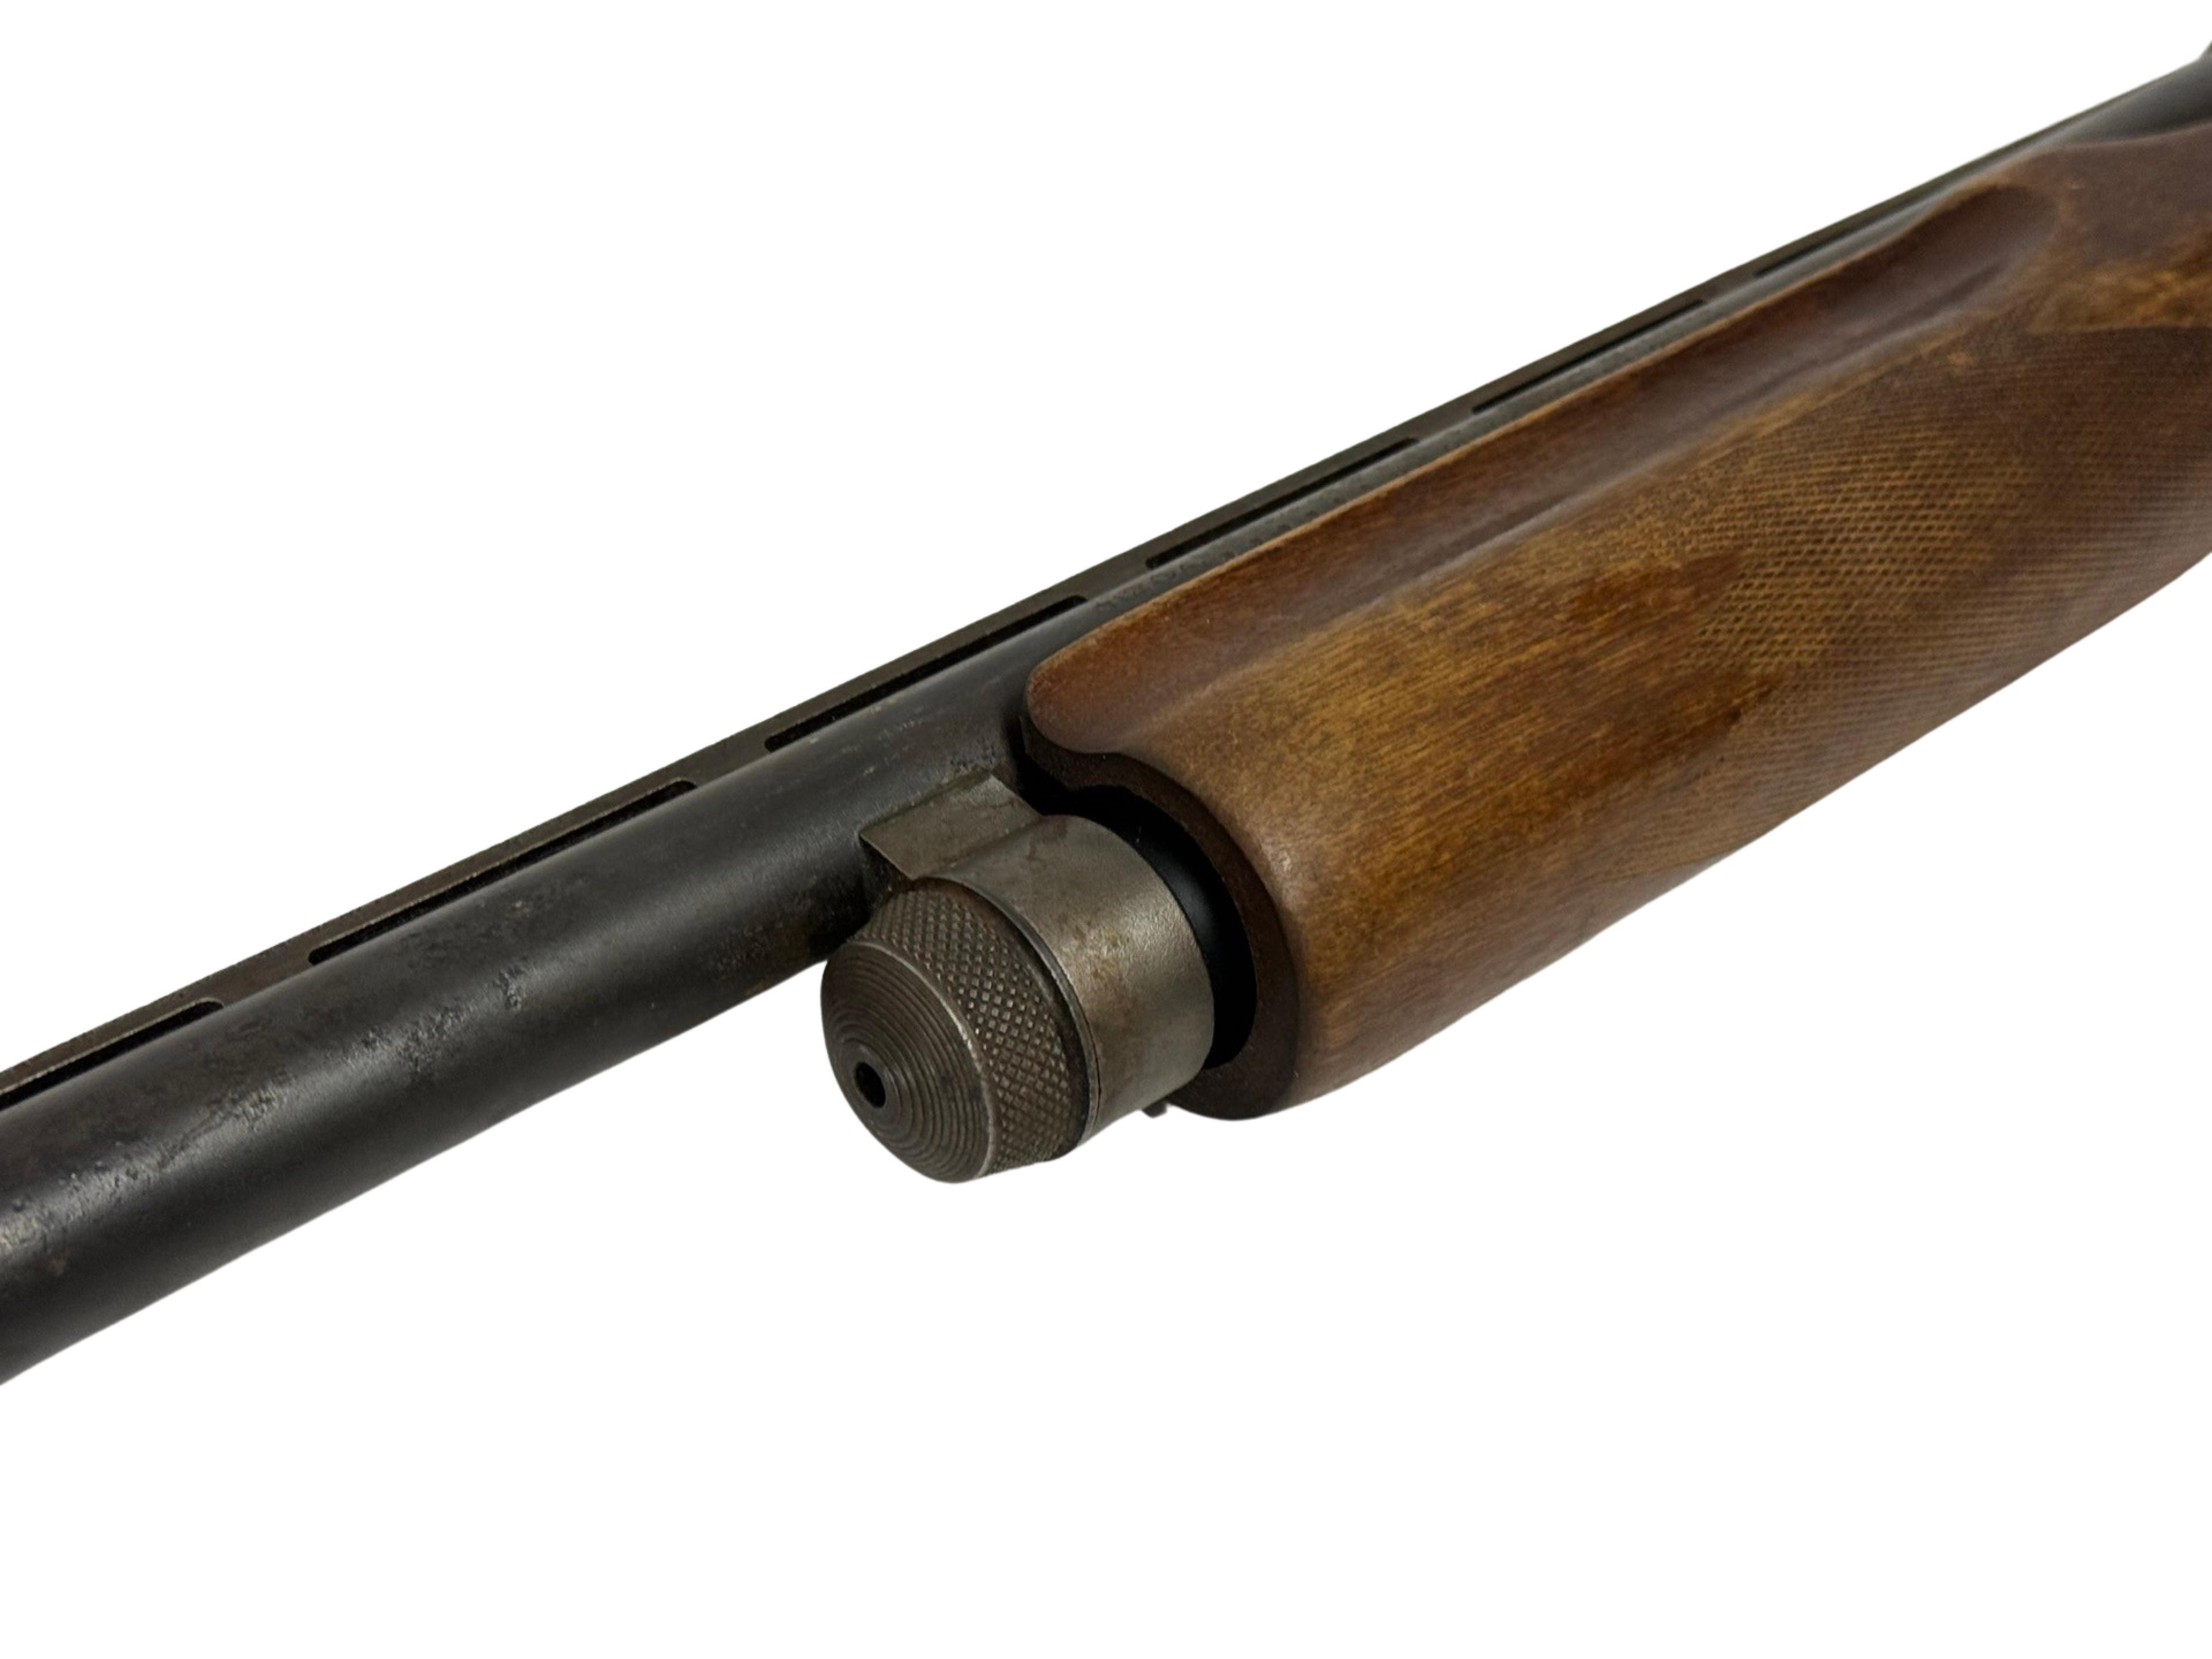 Remington Model 870 Express MAGNUM 12 GA. Pump Action Shotgun